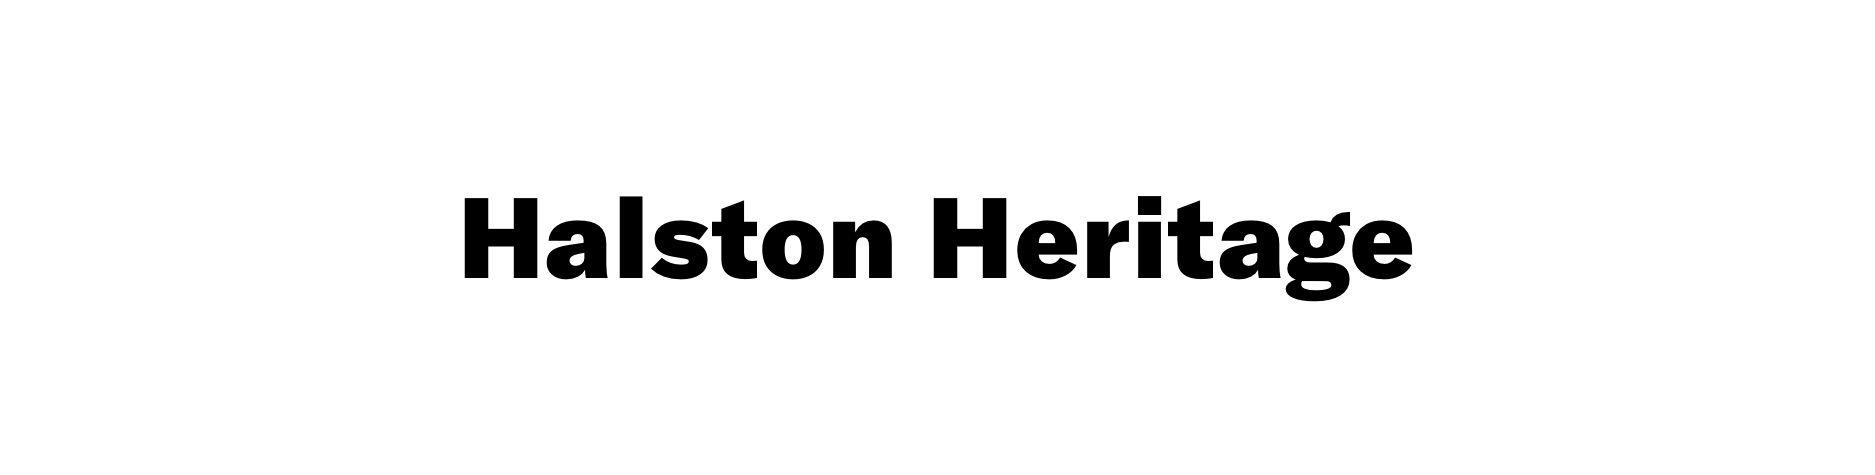 Halston Logo - Shopbop: Halston Heritage